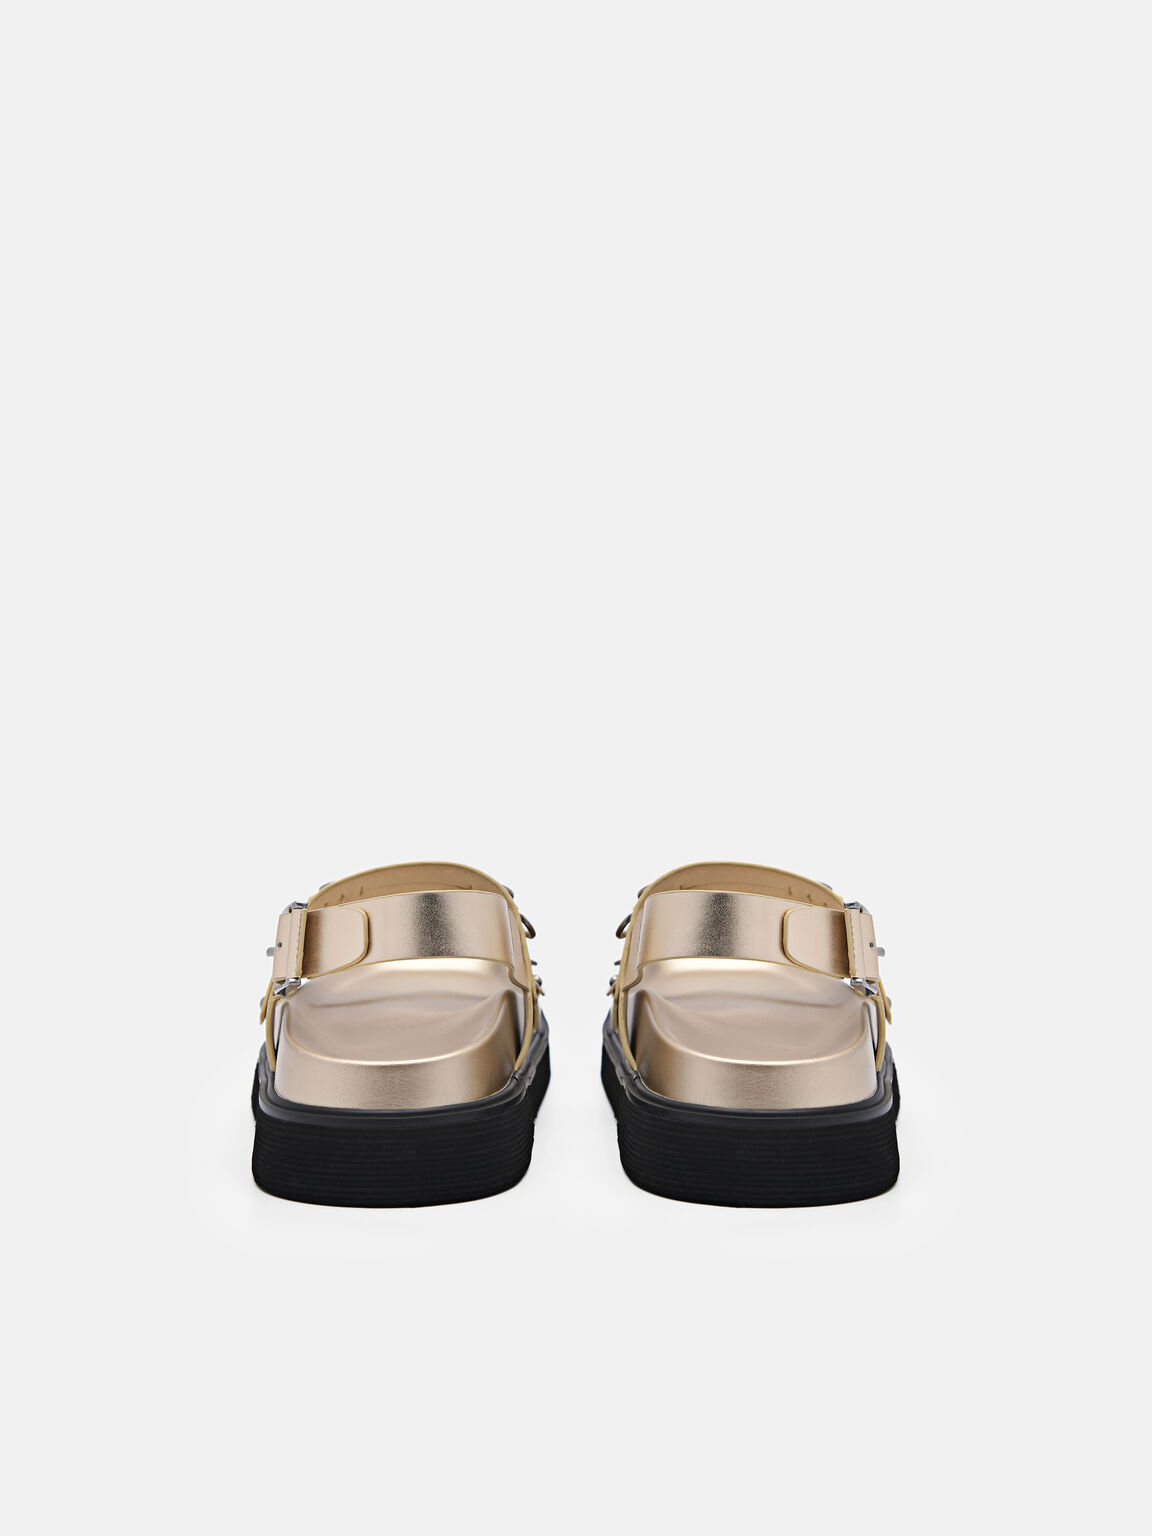 Helix Slingback Sandals, Gold